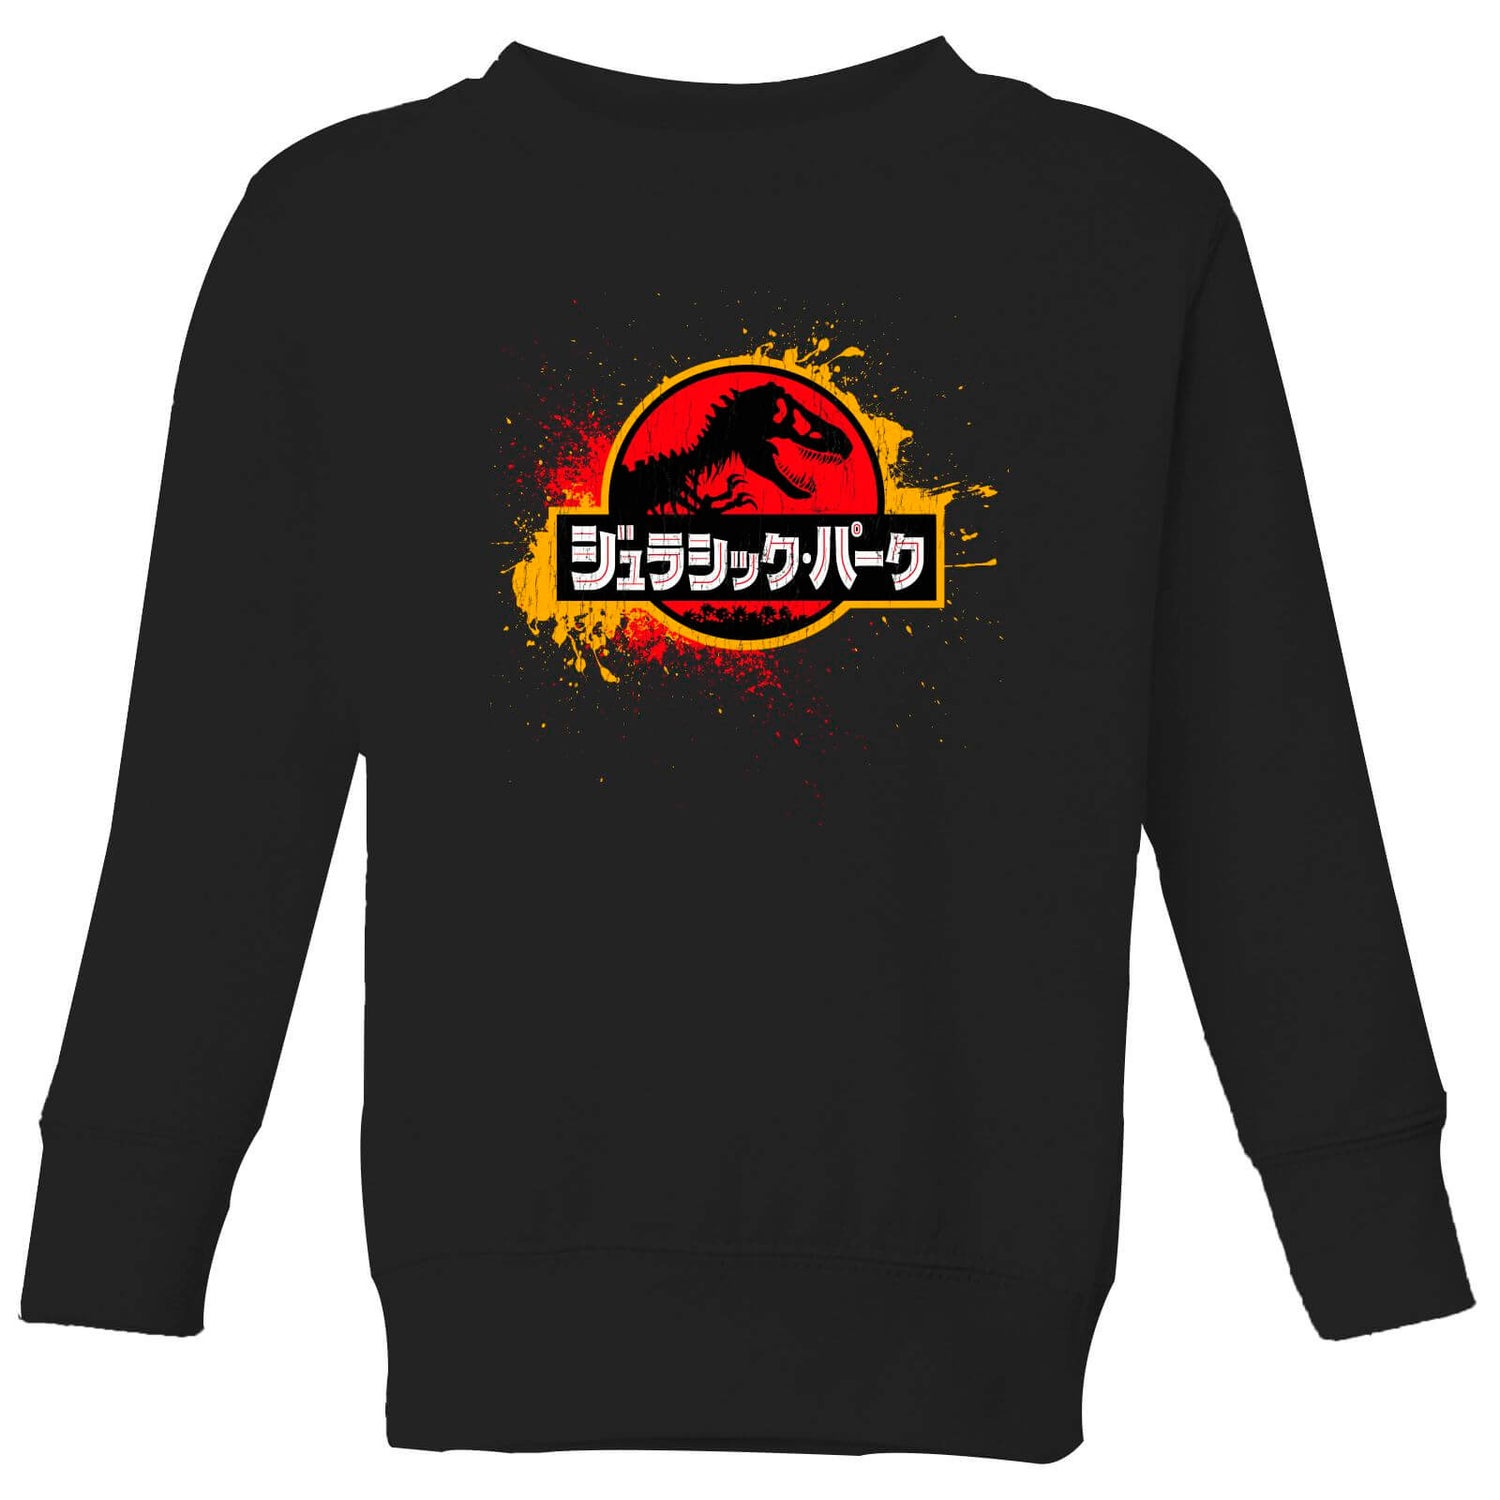 Jurassic Park Kids' Sweatshirt - Black